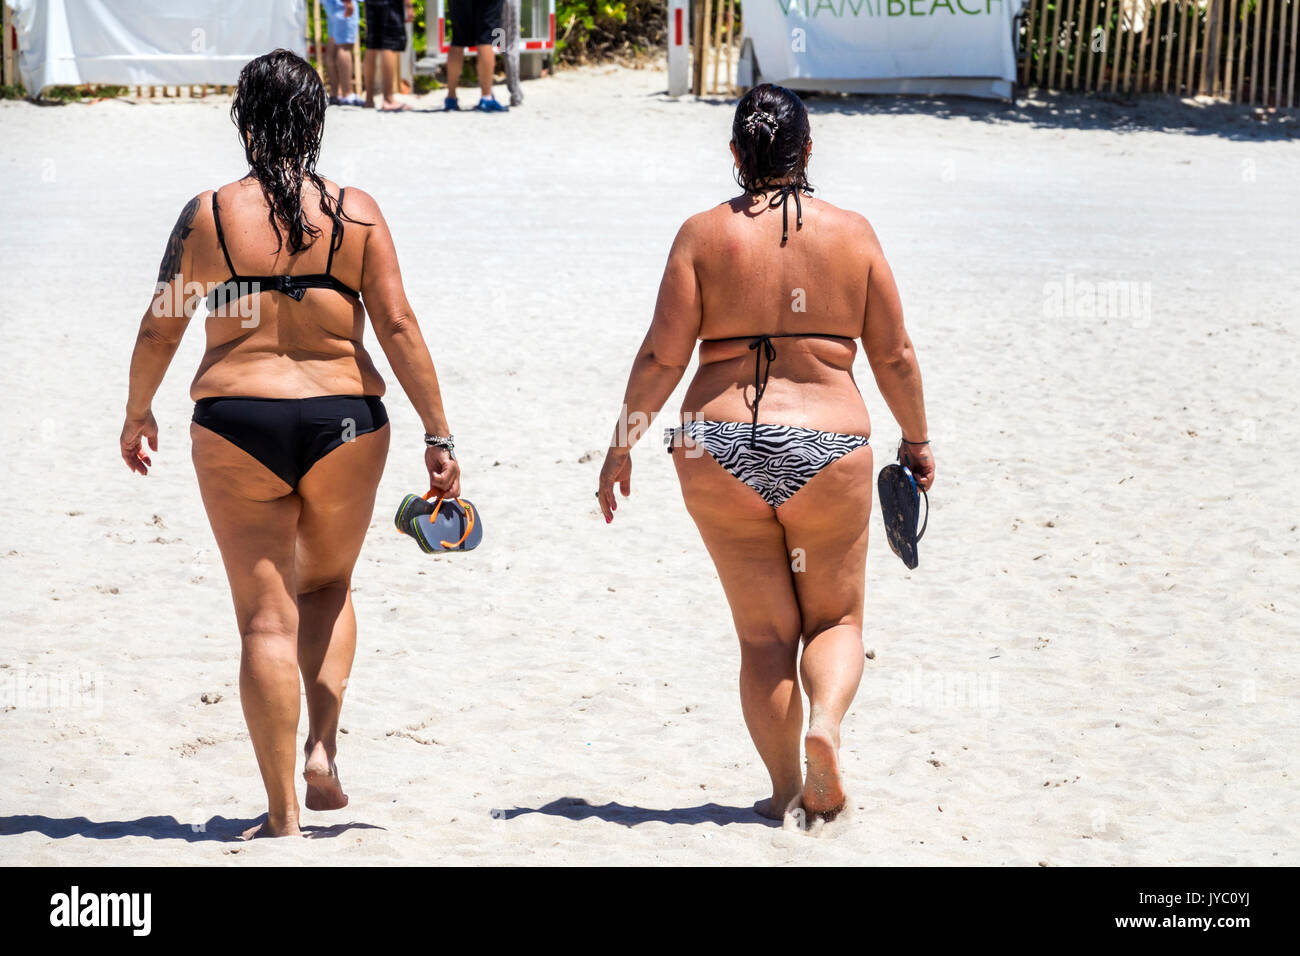 florida-miami-beach-sand-adult-adults-woman-women-female-lady-bikini-JYC0YJ.jpg